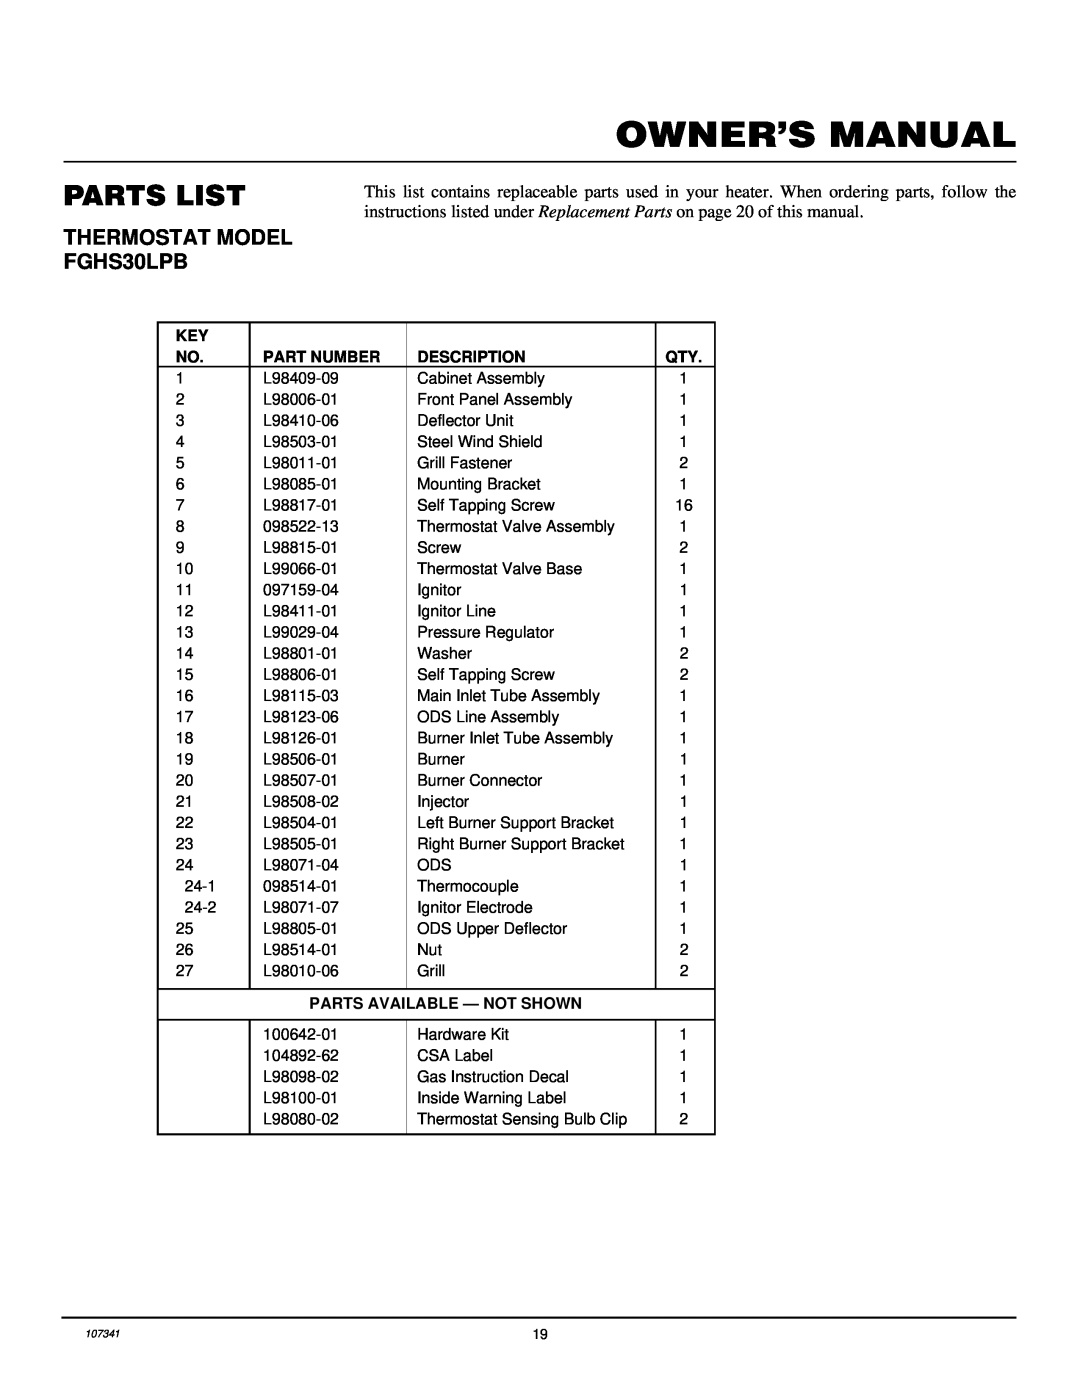 Desa installation manual Parts List, THERMOSTAT MODEL FGHS30LPB 